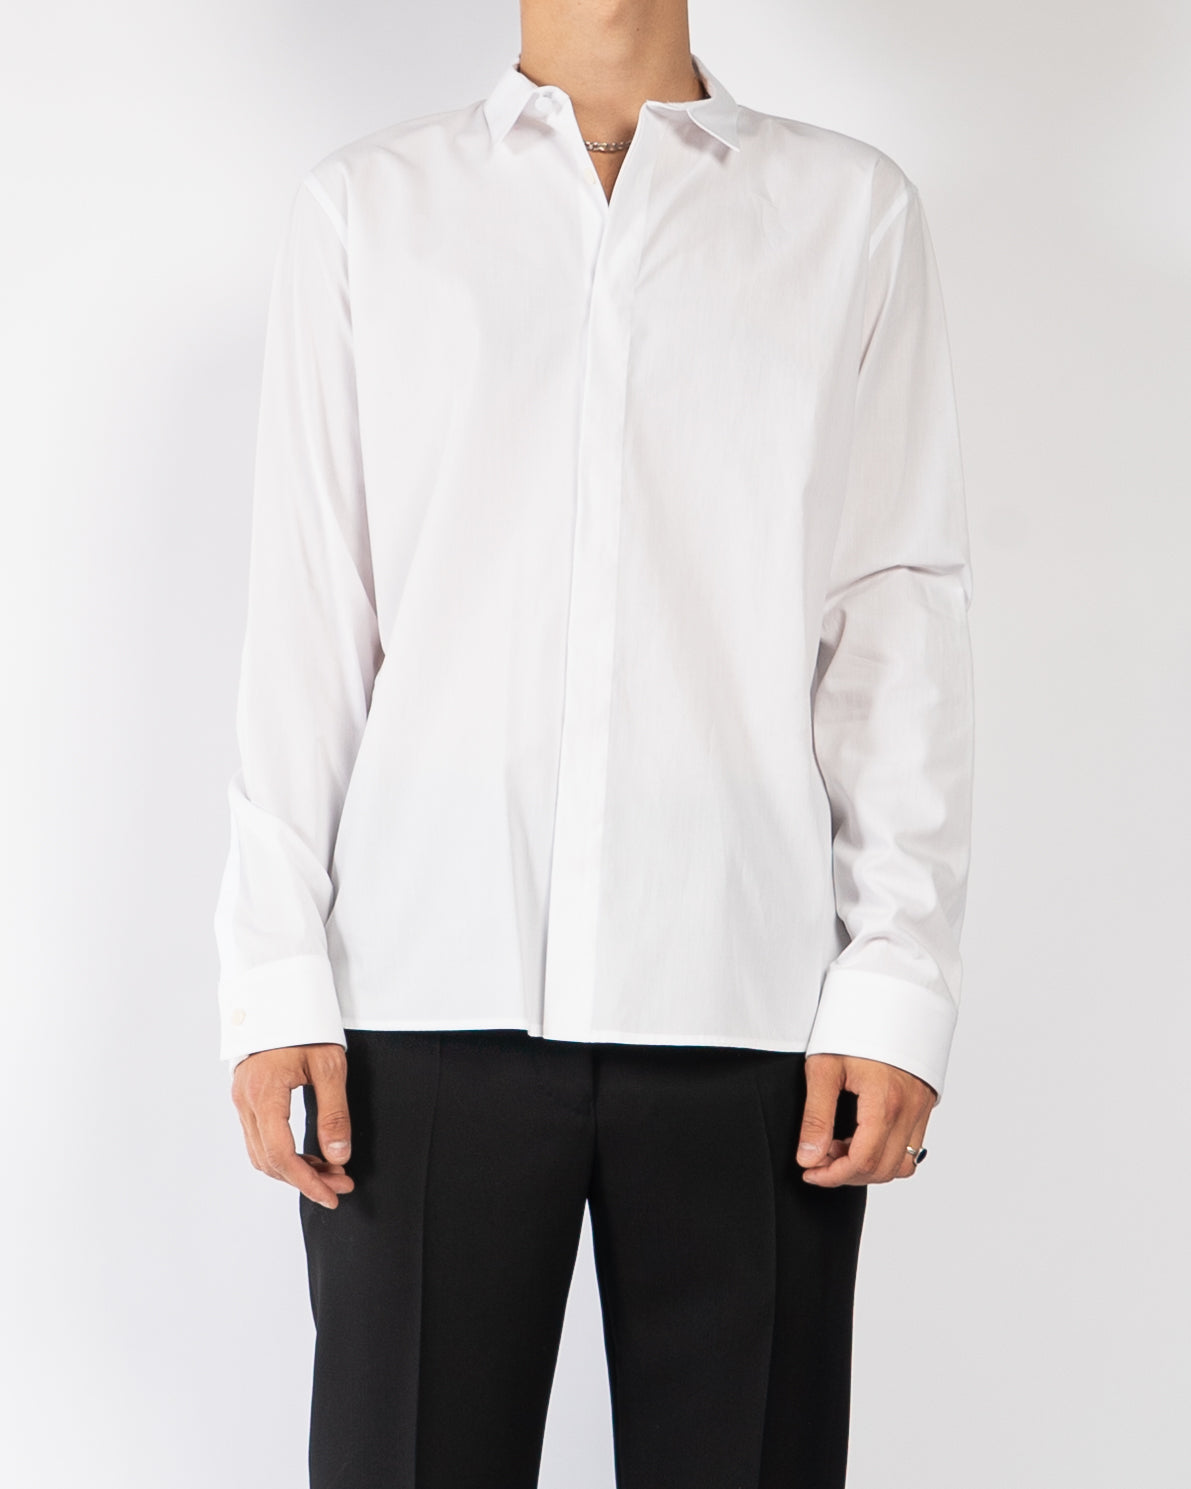 SS19 Classic White Byron Cotton Shirt